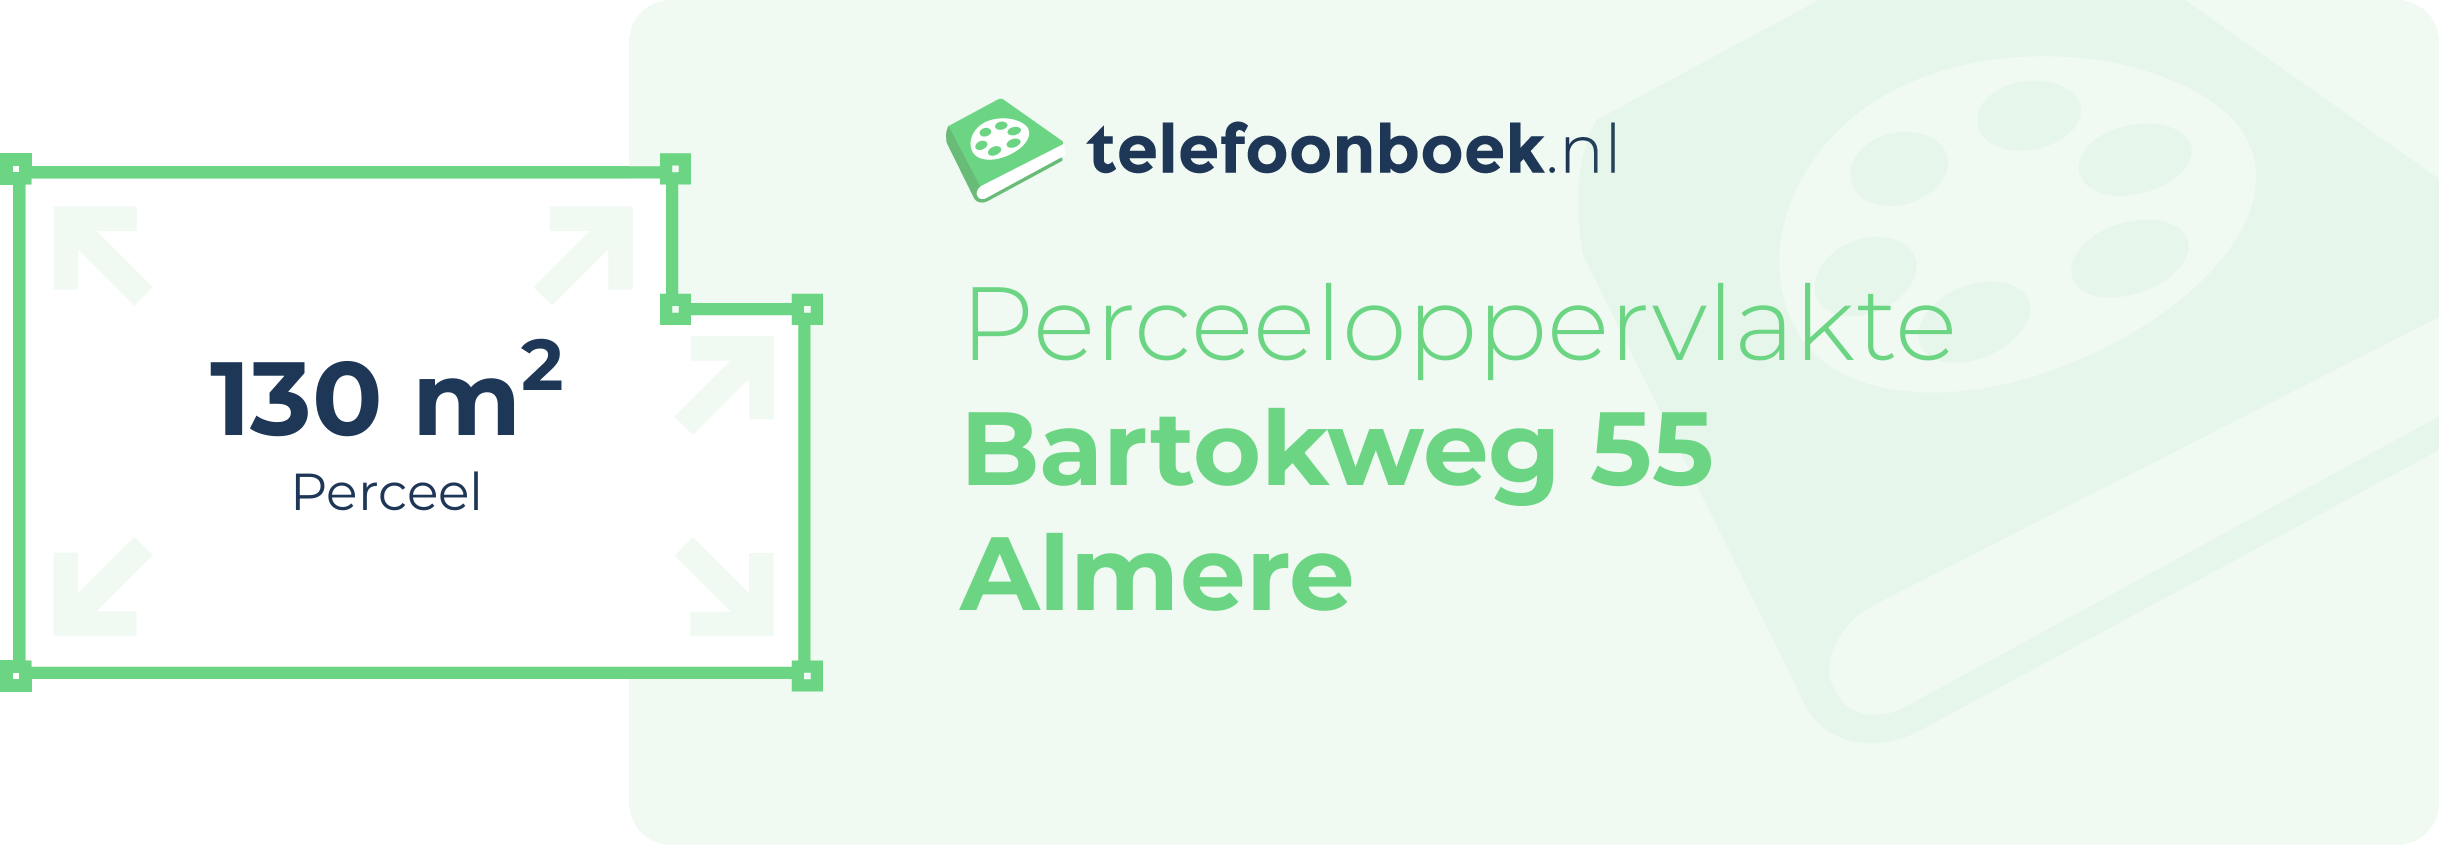 Perceeloppervlakte Bartokweg 55 Almere